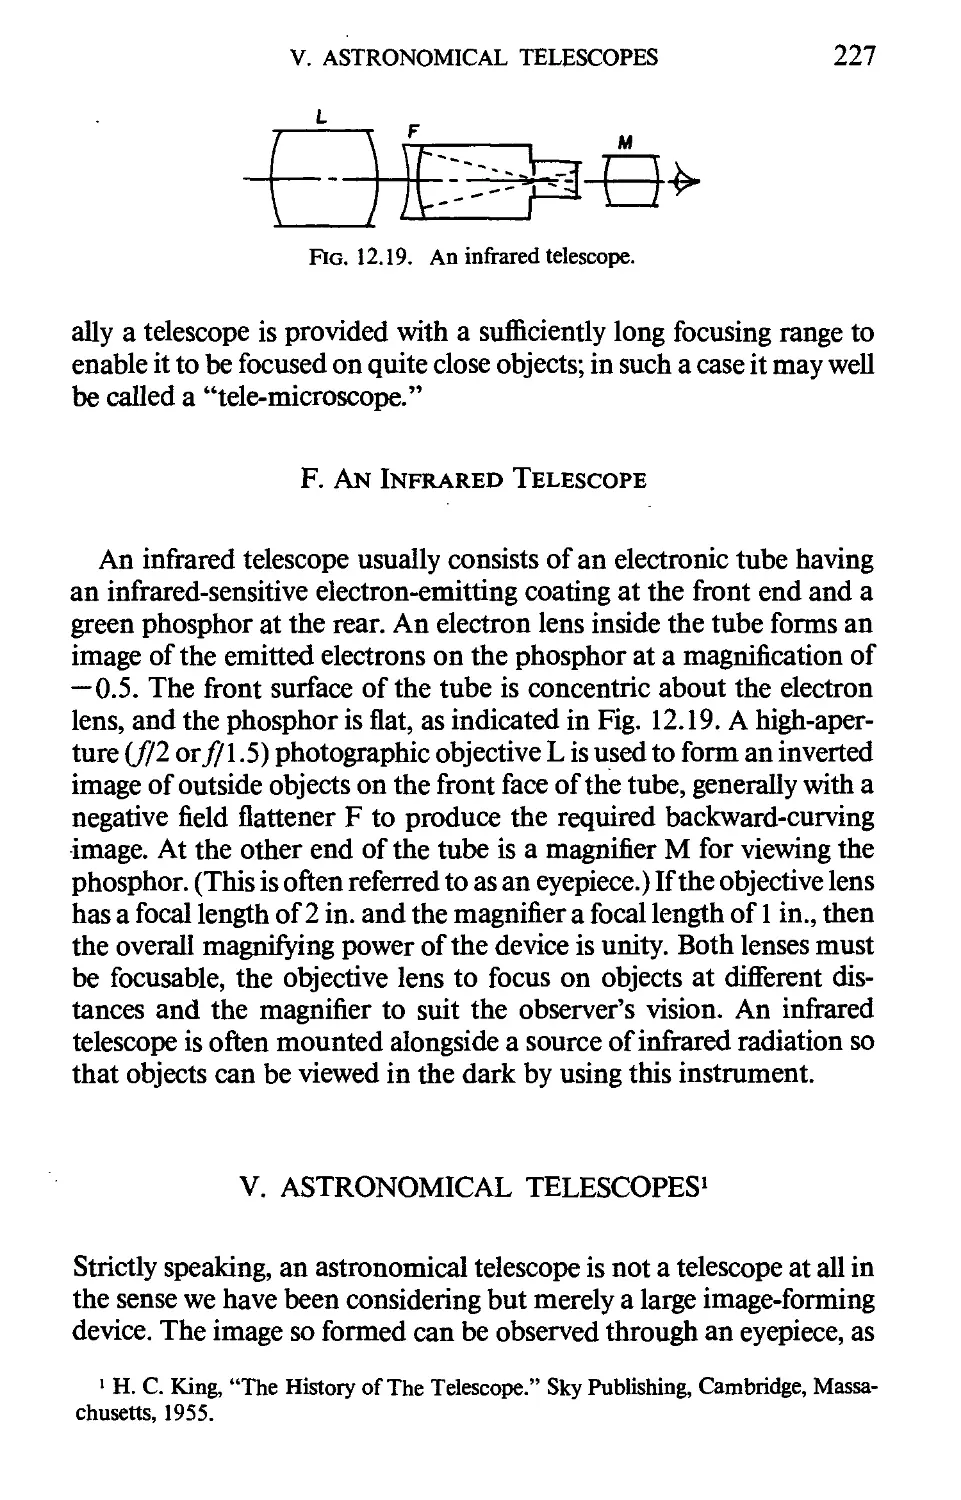 F. An Infrared Telescope
V. Astronomical Telescopes